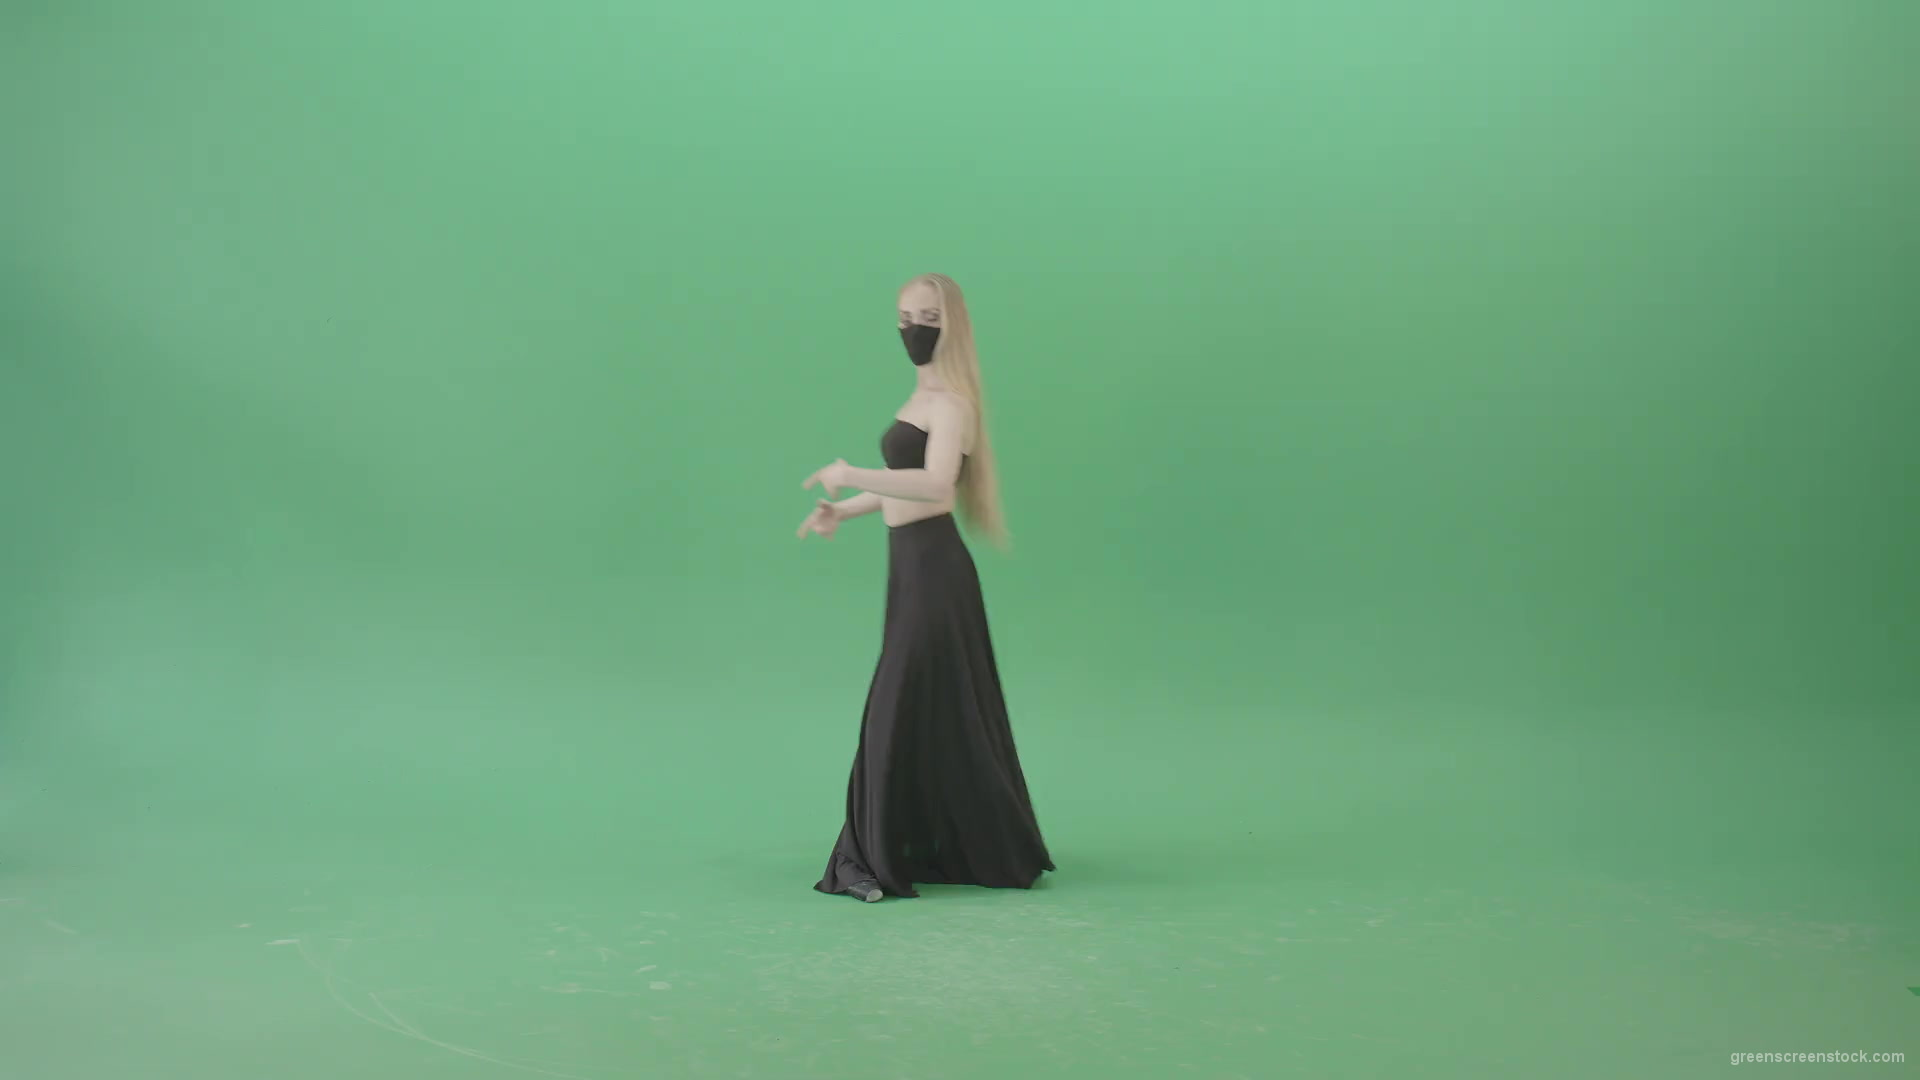 Blonde-Ballet-girl-in-black-dress-and-mask-dancing-Corona-Virus-flamenco-on-green-screen-4K-Video-Footage-1920_001 Green Screen Stock